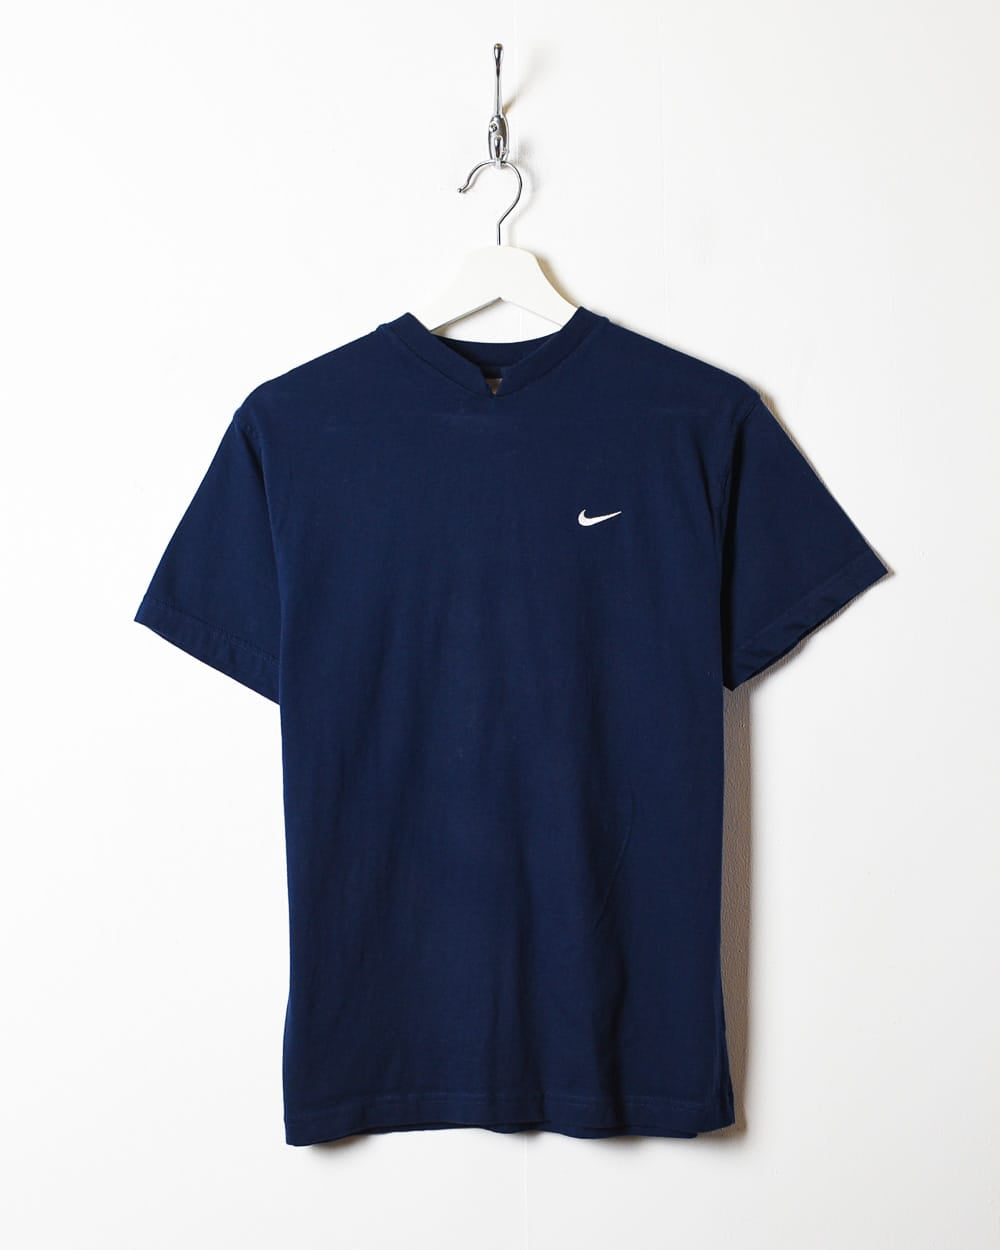 Navy Nike T-Shirt - X-Large Women's